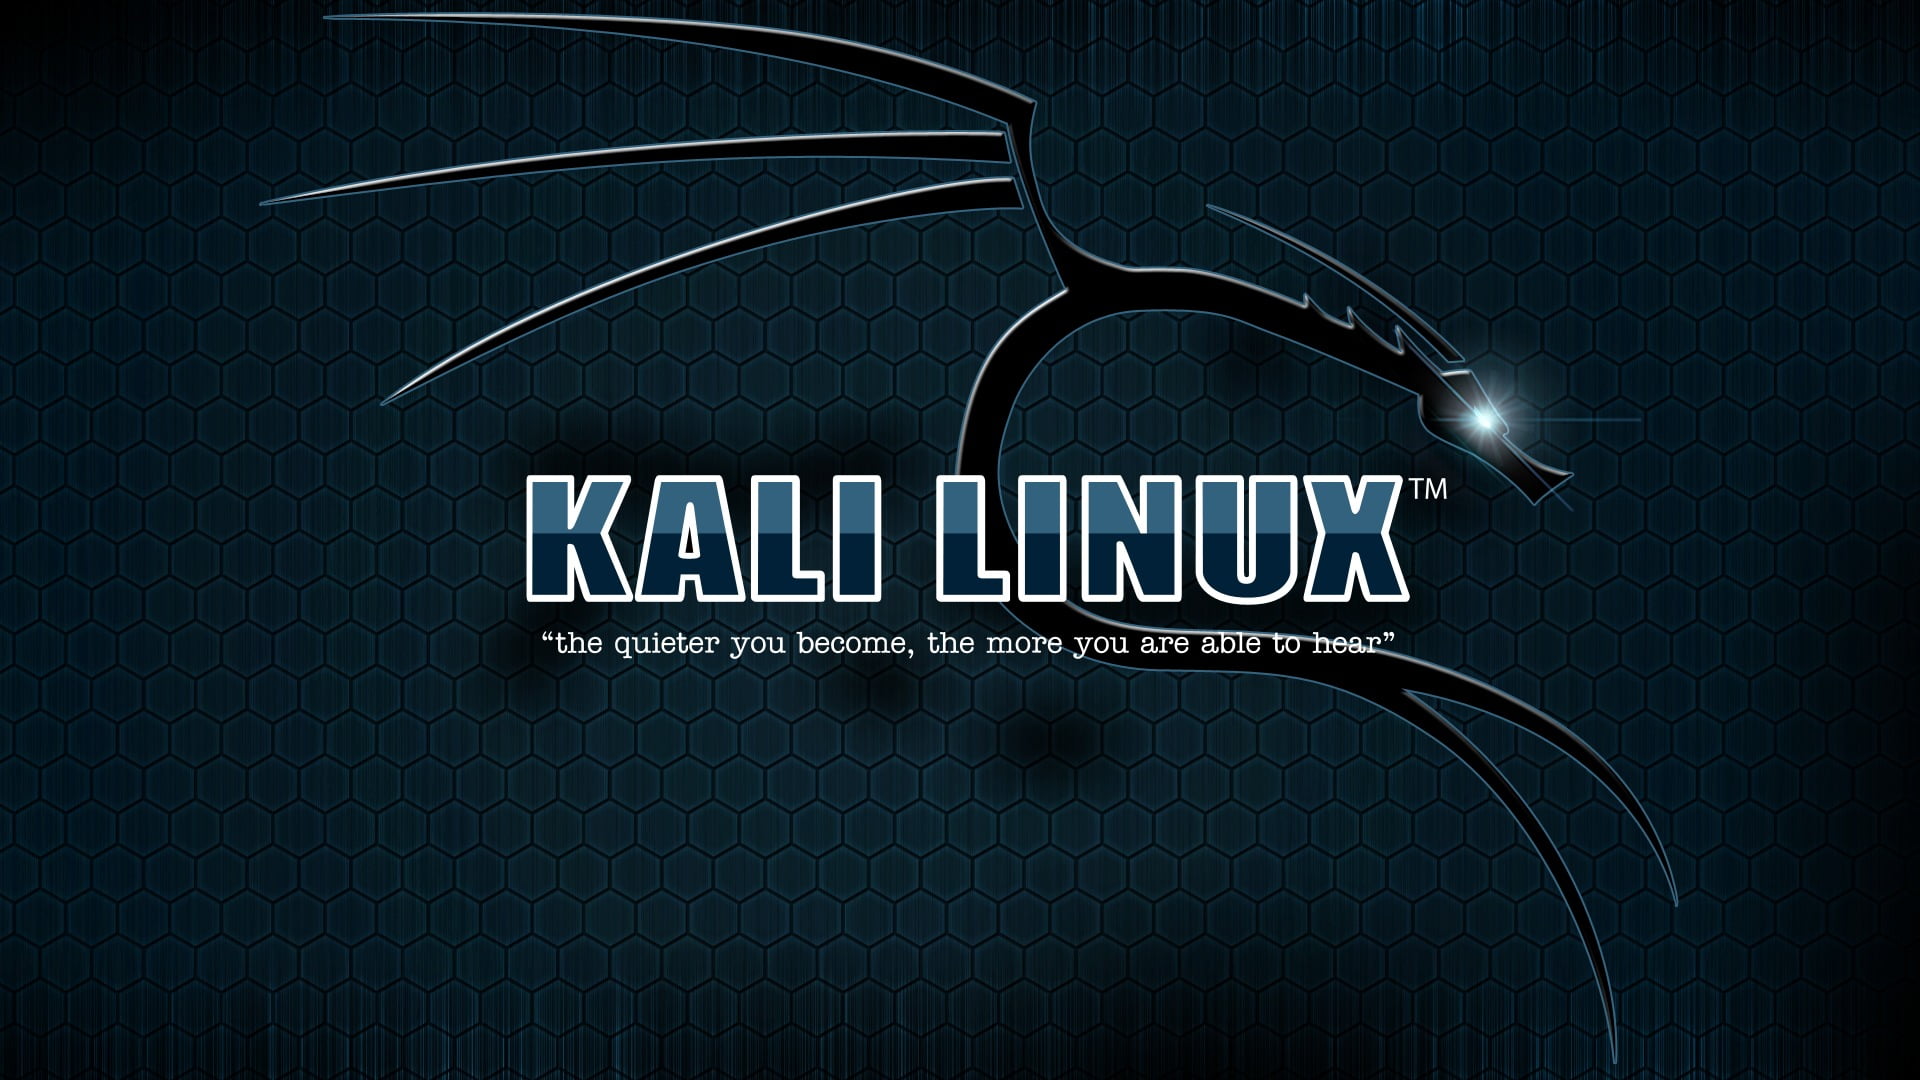 Kali Linux logo, text, western script, communication, indoors